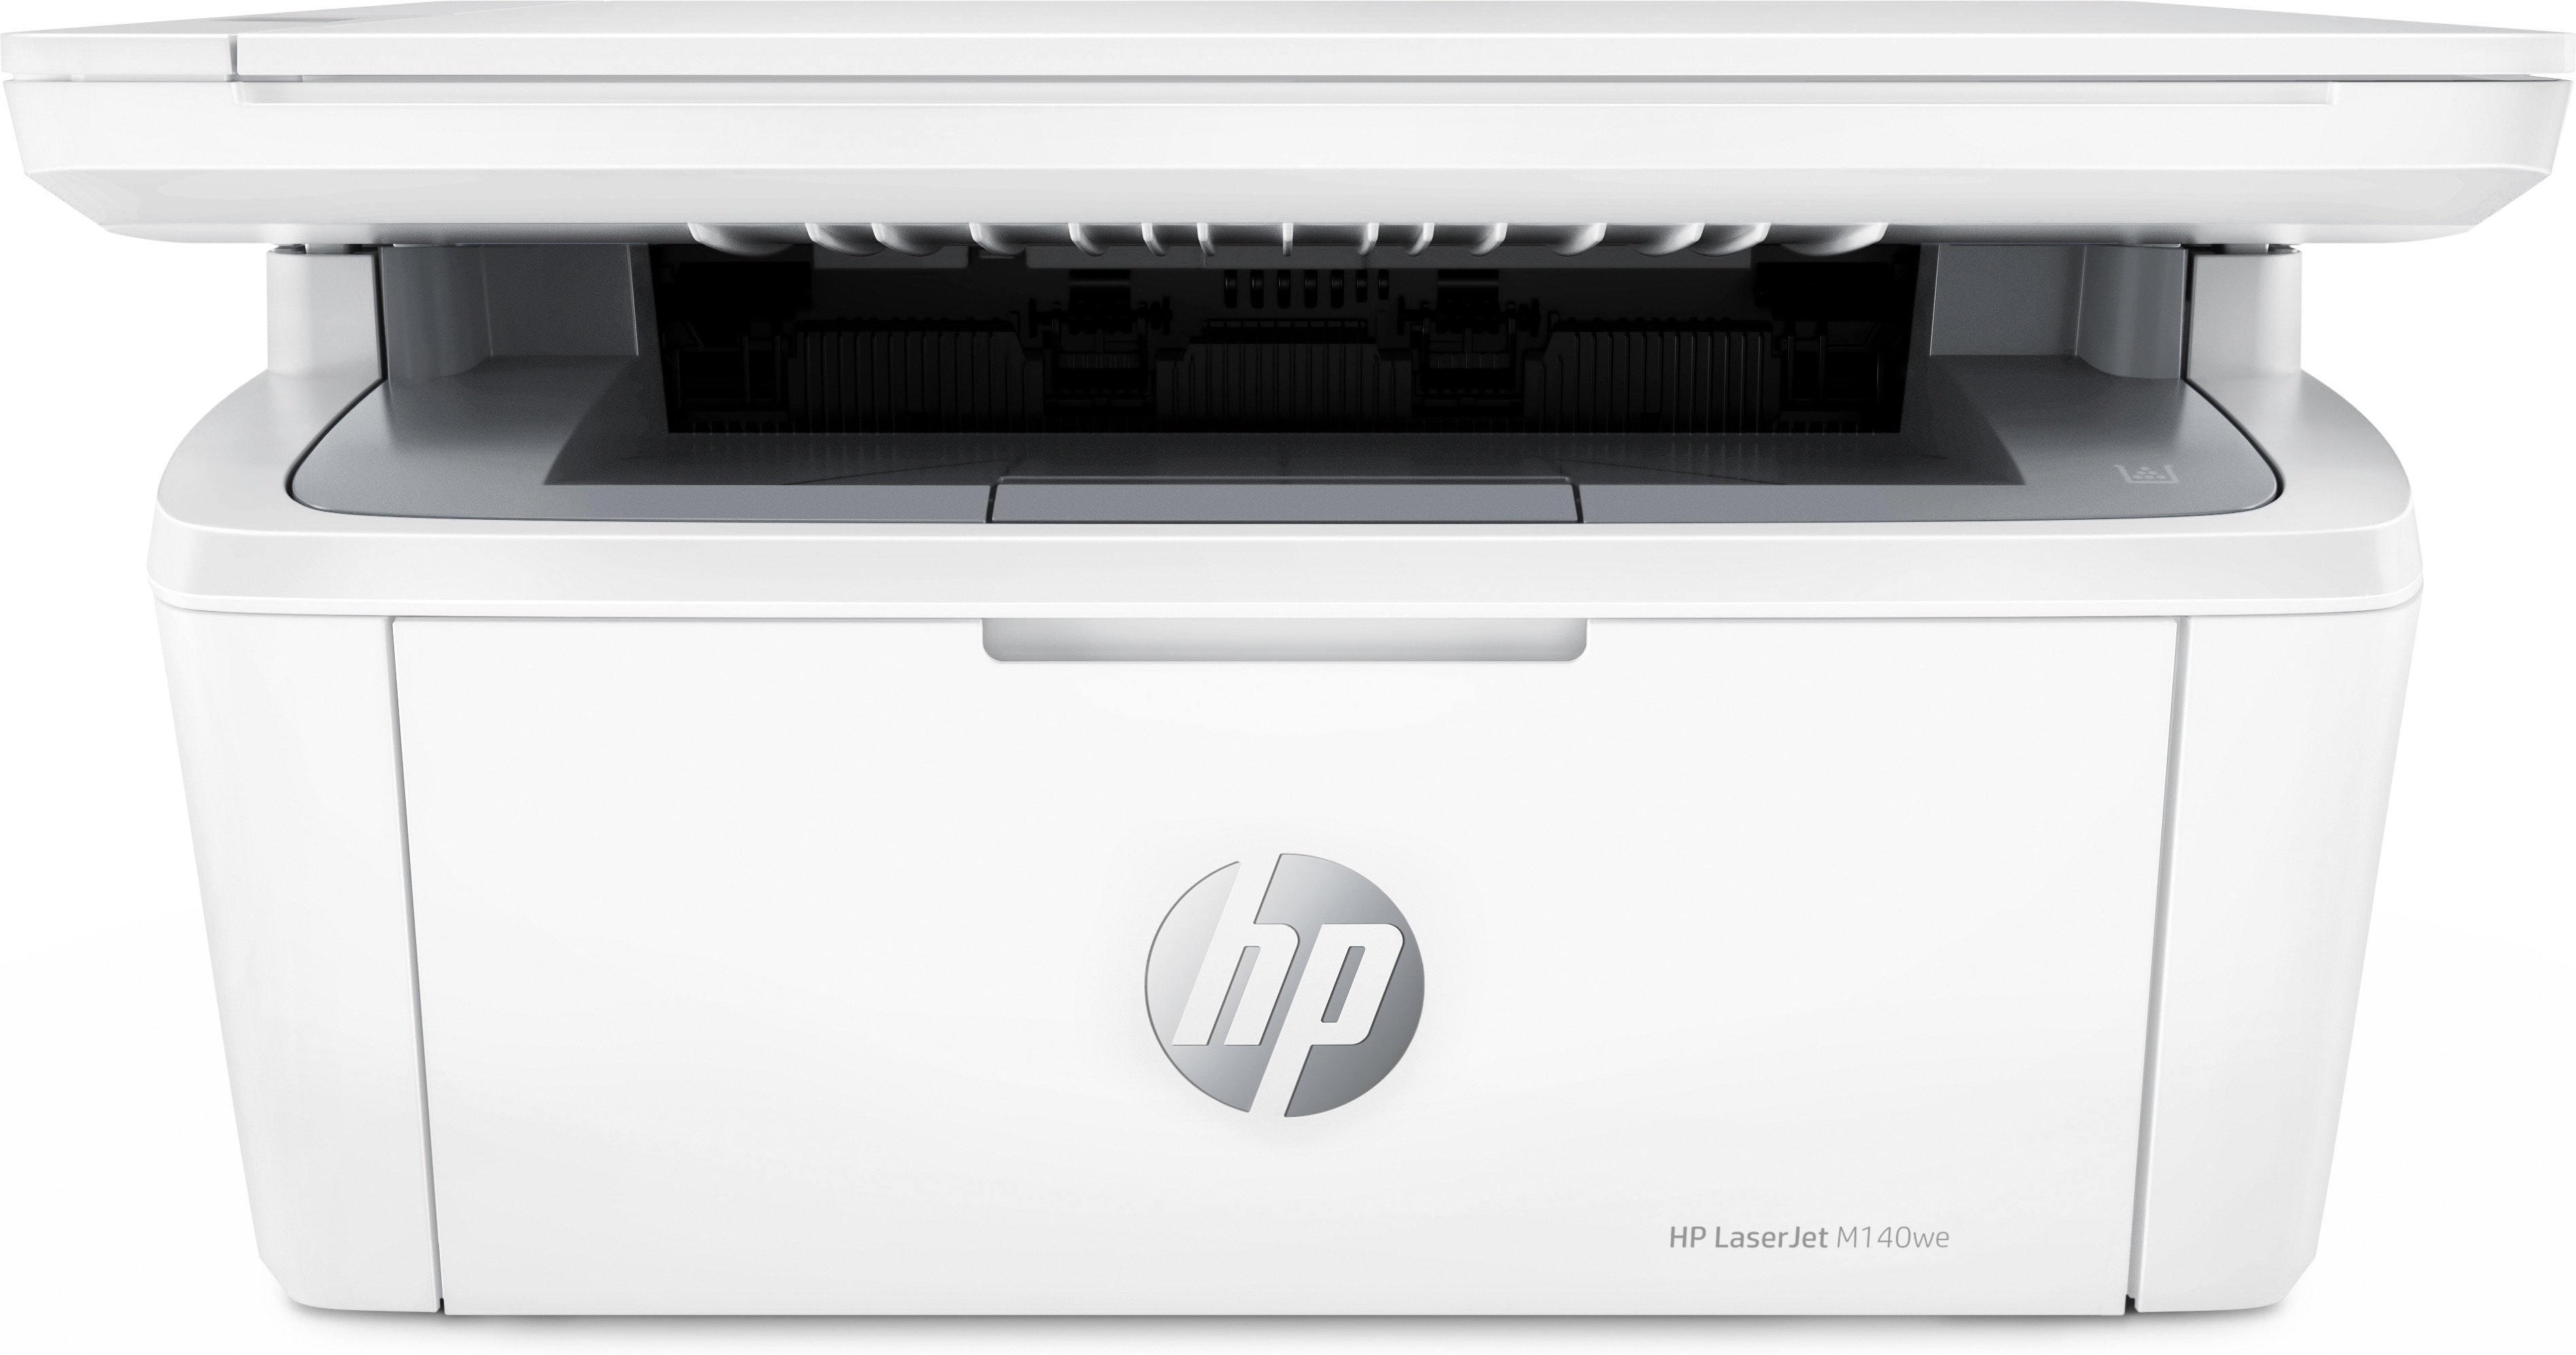 HP LaserJet HP LaserJet MFP M140we printer, Zwart-wit, Printer voor kantoren, Printen, kopiëren, scannen, Scannen e-mail; Scannen naar pdf (7MD72E#B19) kopen » Centralpoint